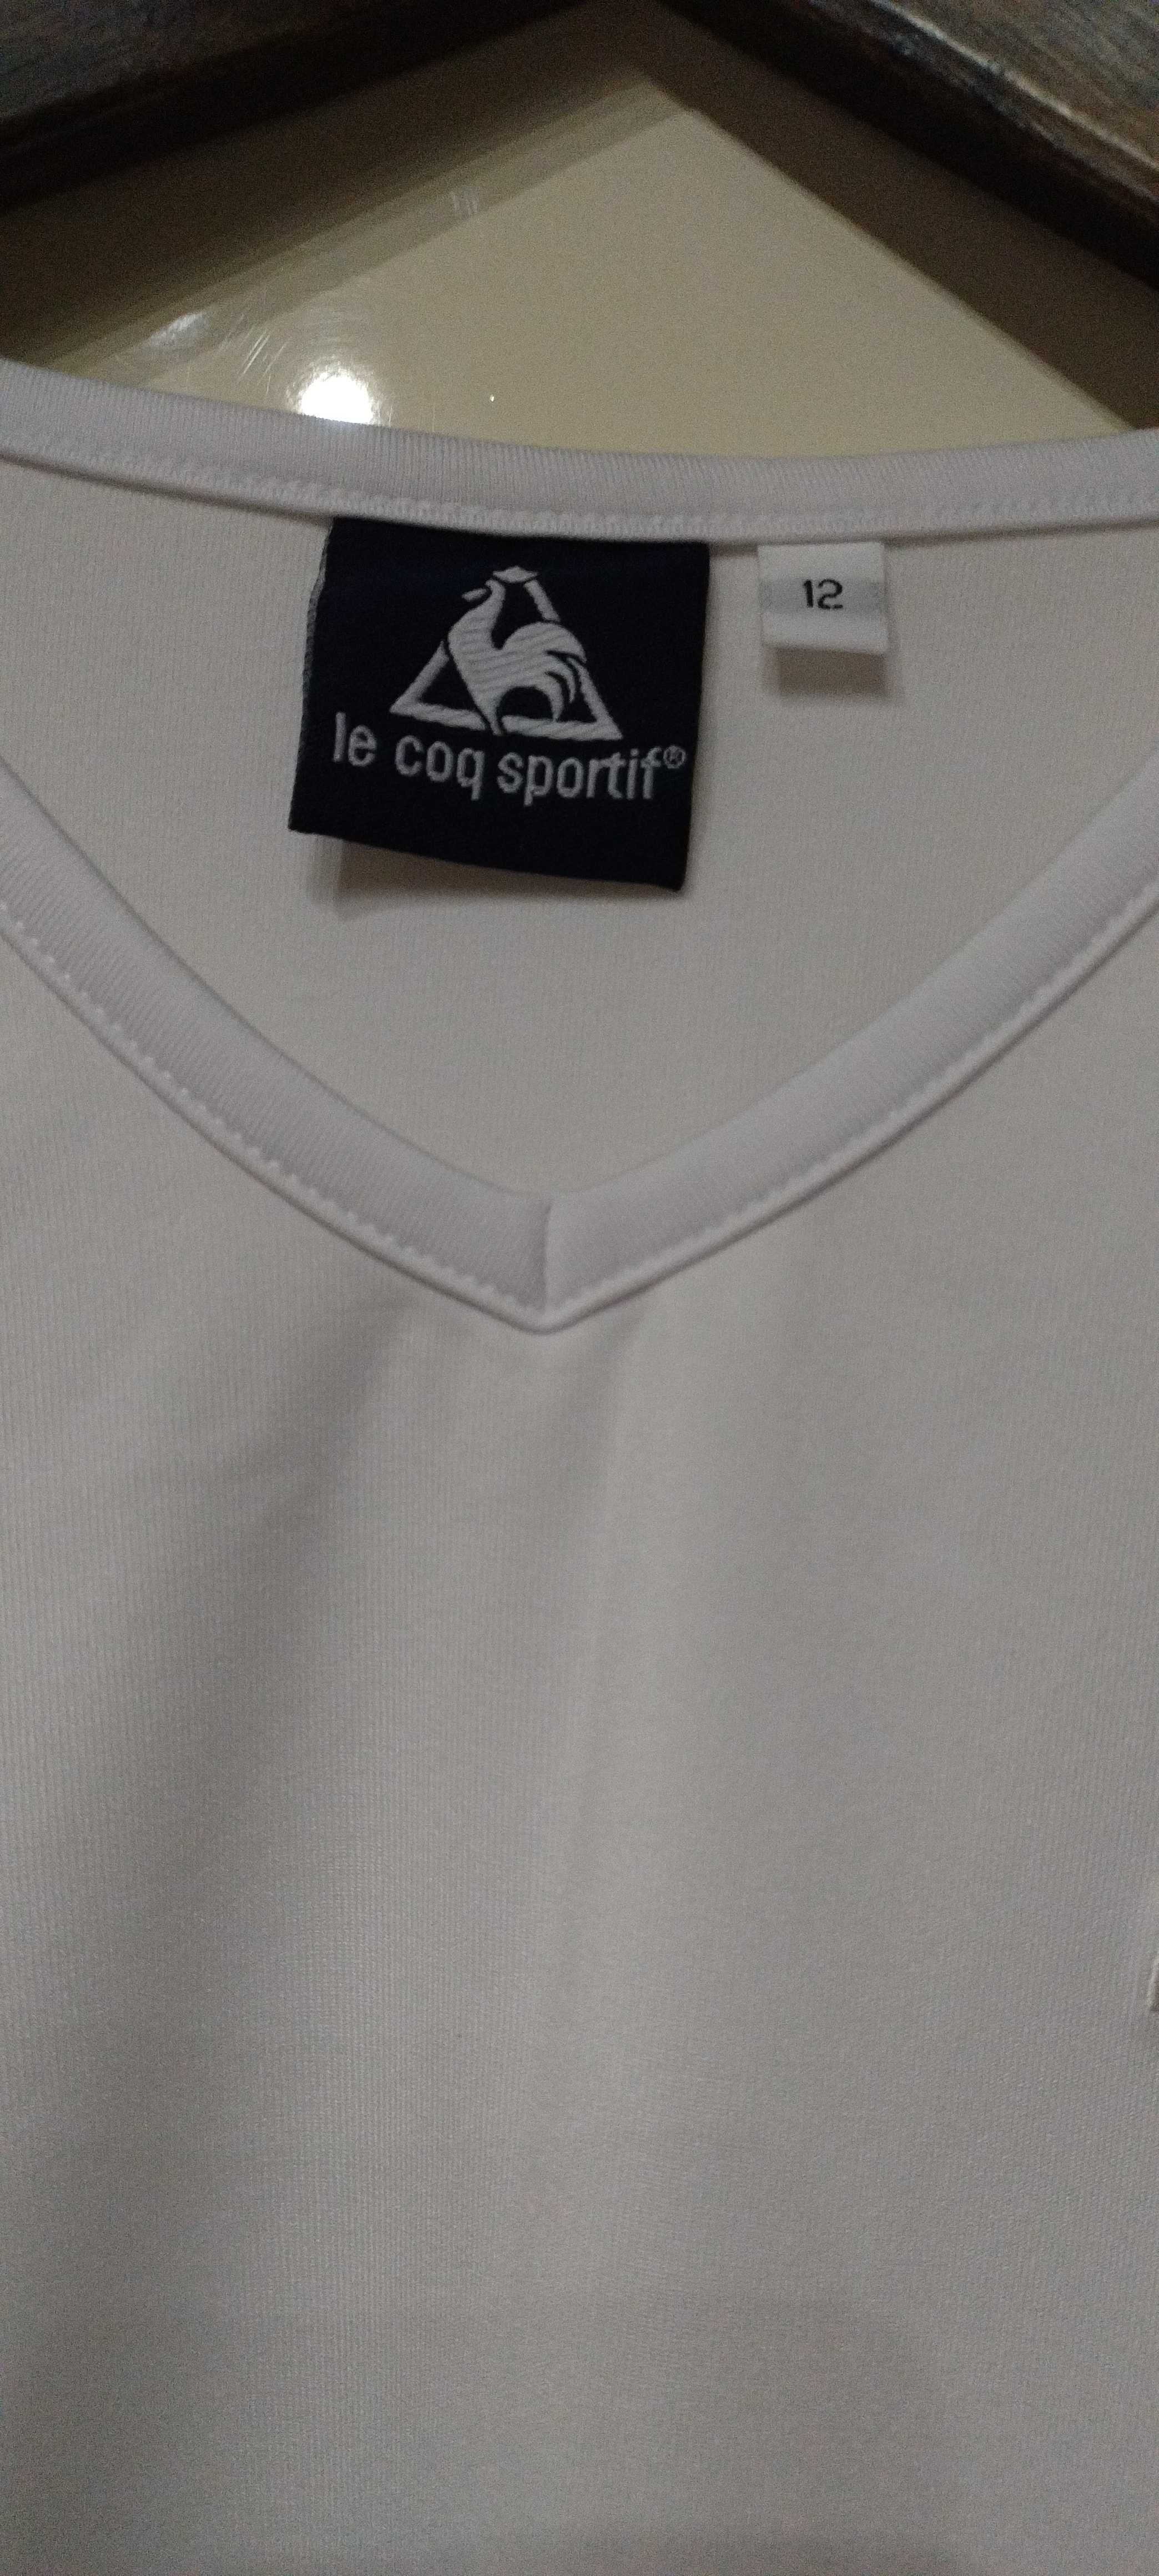 T-shirt  damski sportowy.  Firmy Le cog sportif .